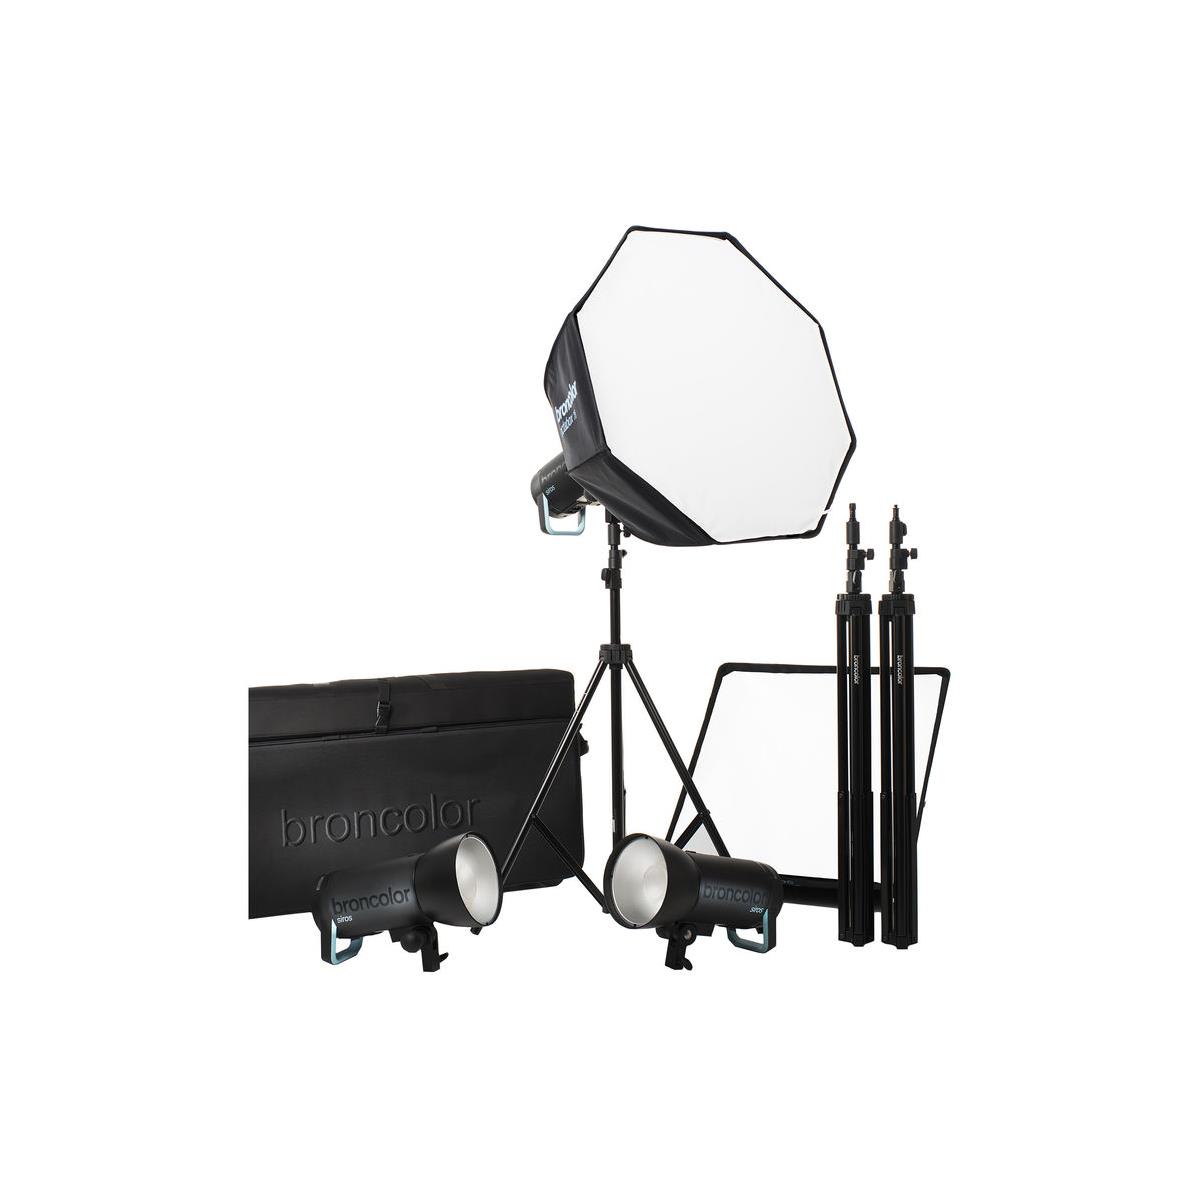 Image of Broncolor Siros 800 S Pro 3 Monolight Flash Kit